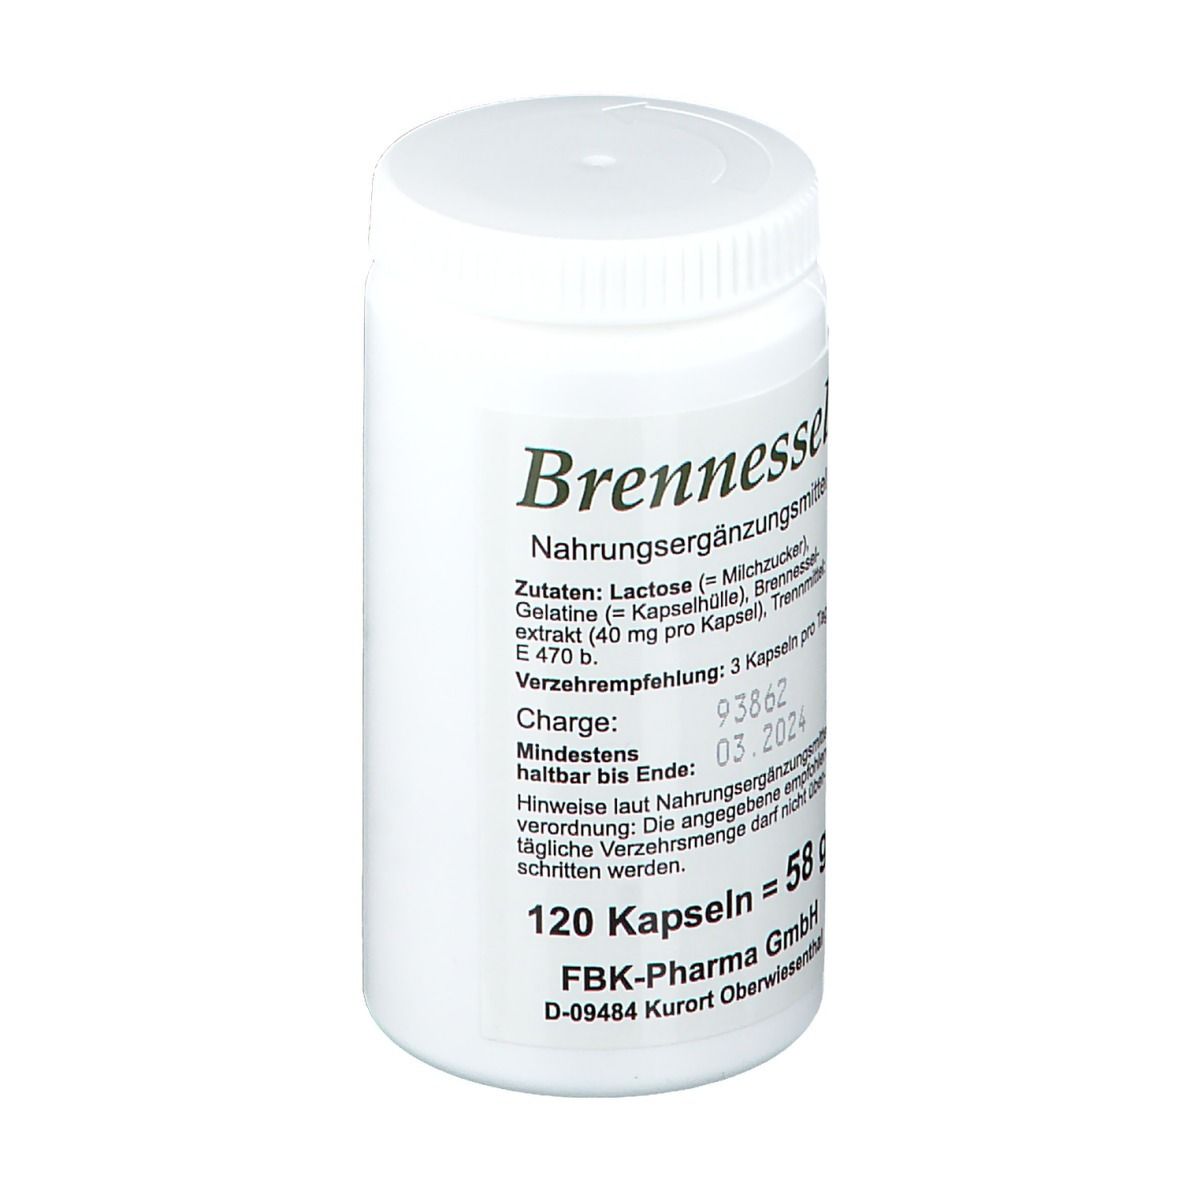 green line BRENNESSEL 500 mg EXTRAKT BIO 60 St - Shop Apotheke